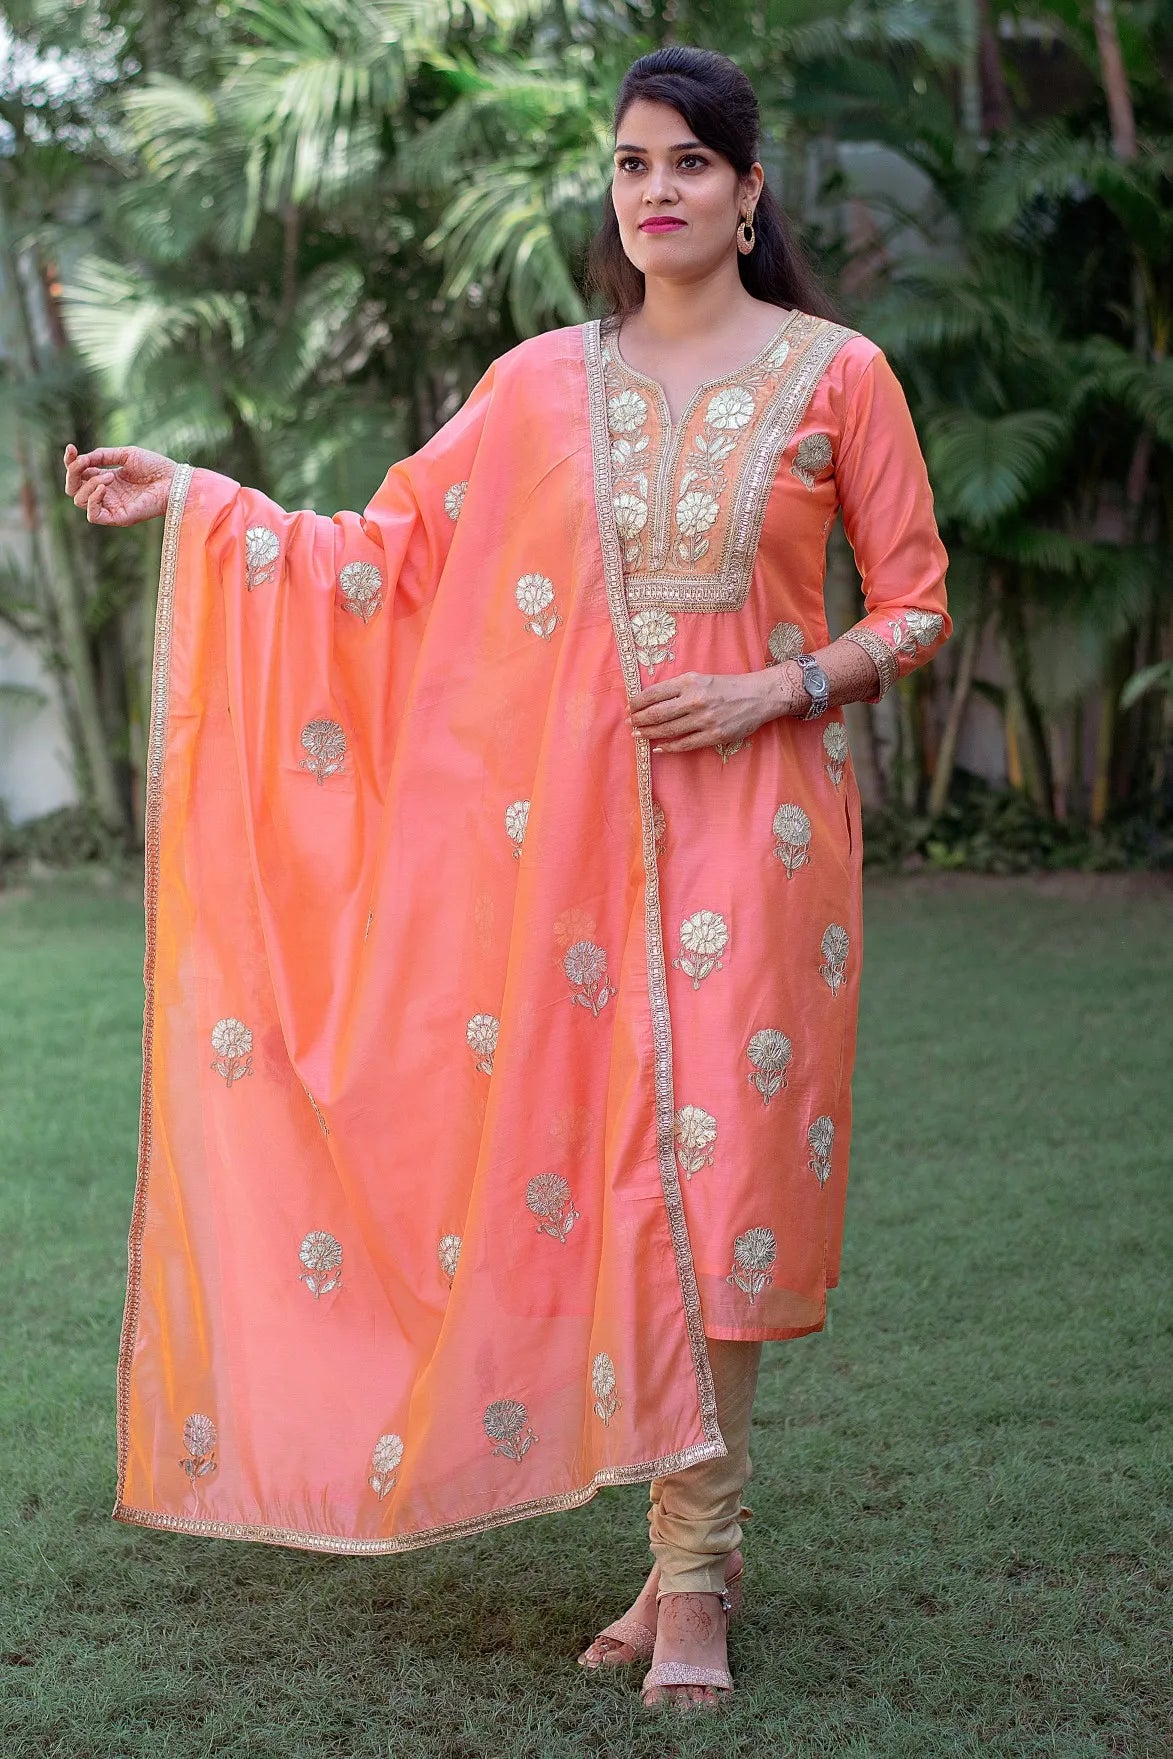 Traditional Indian attire: Peach Chanderi Kurta with Gota Work, Dupatta, and Golden Churidar.